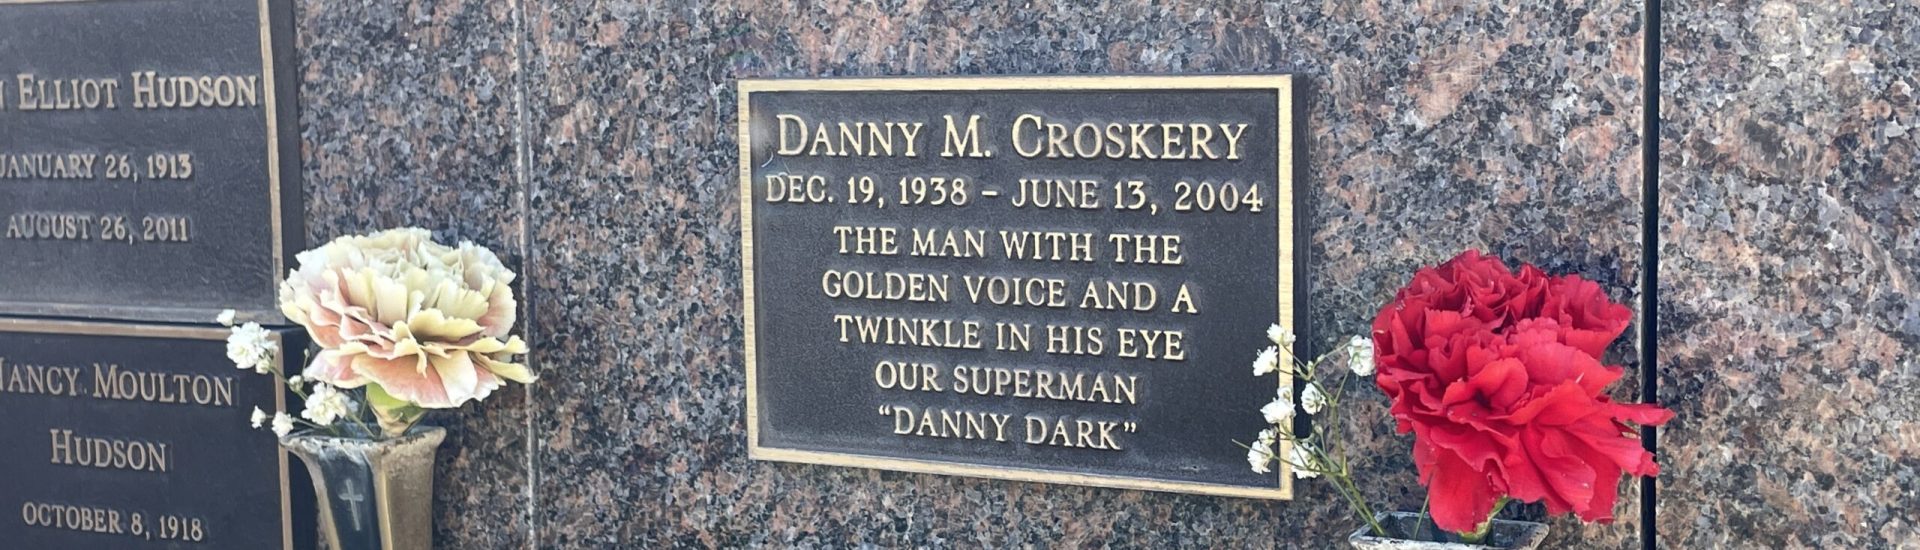 Danny Dark